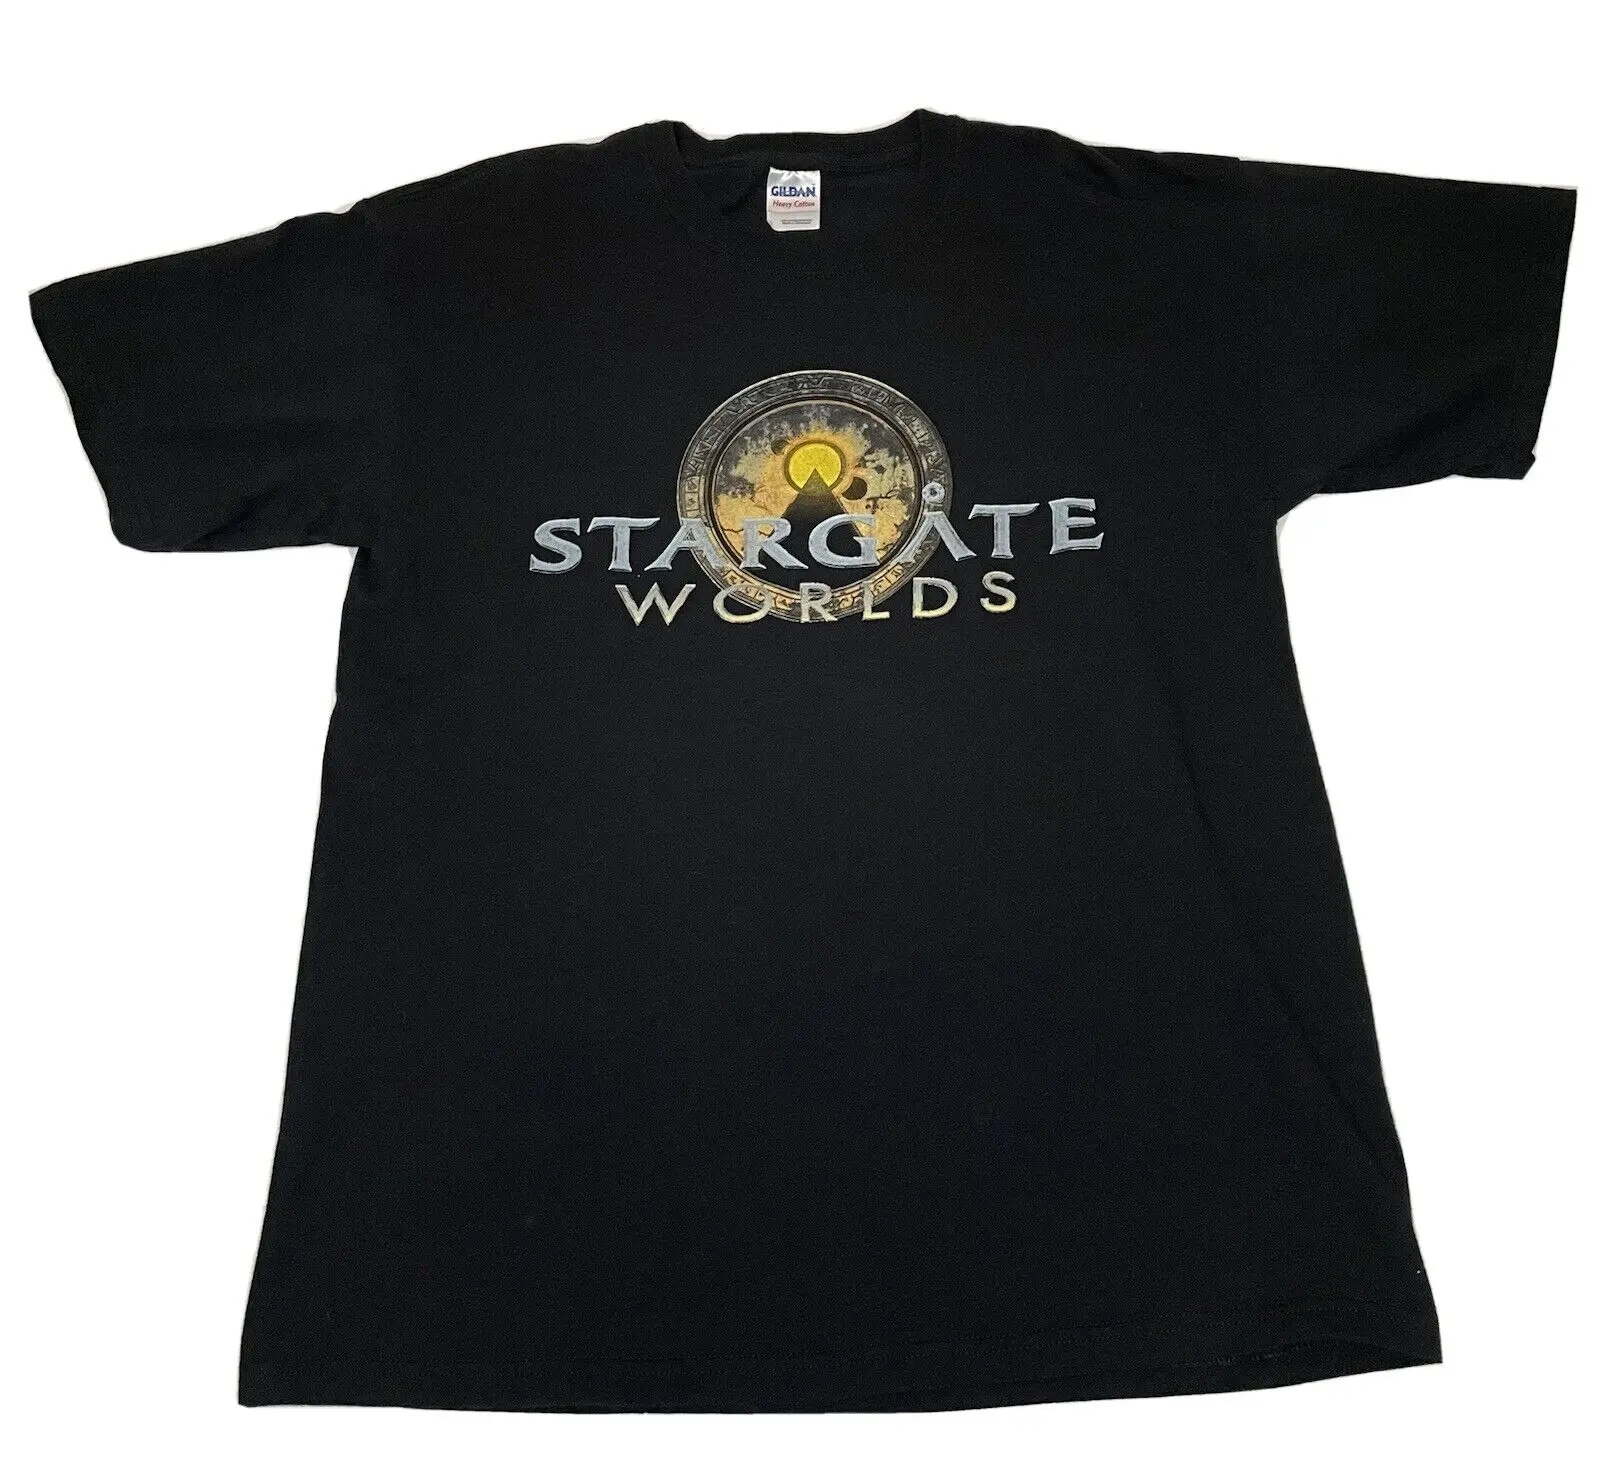 Мужская черная футболка Stargate Worlds L Промо-футболка для видеоигры Rpg Online отменена